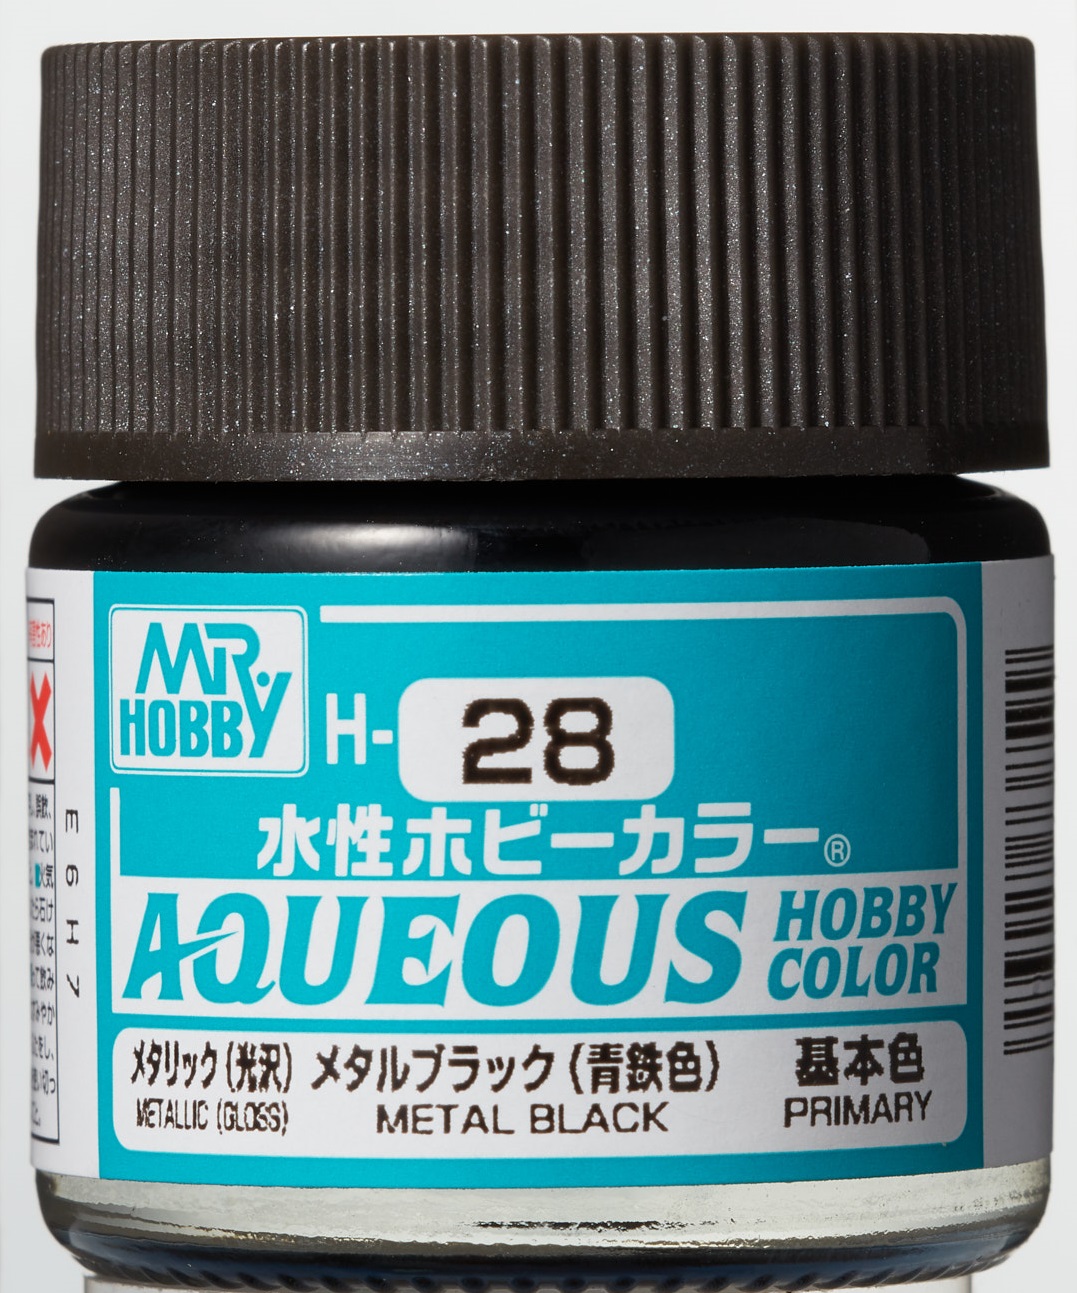 Mr. Aqueous Hobby Color - Metal Black - H28 - Metall Schwarz